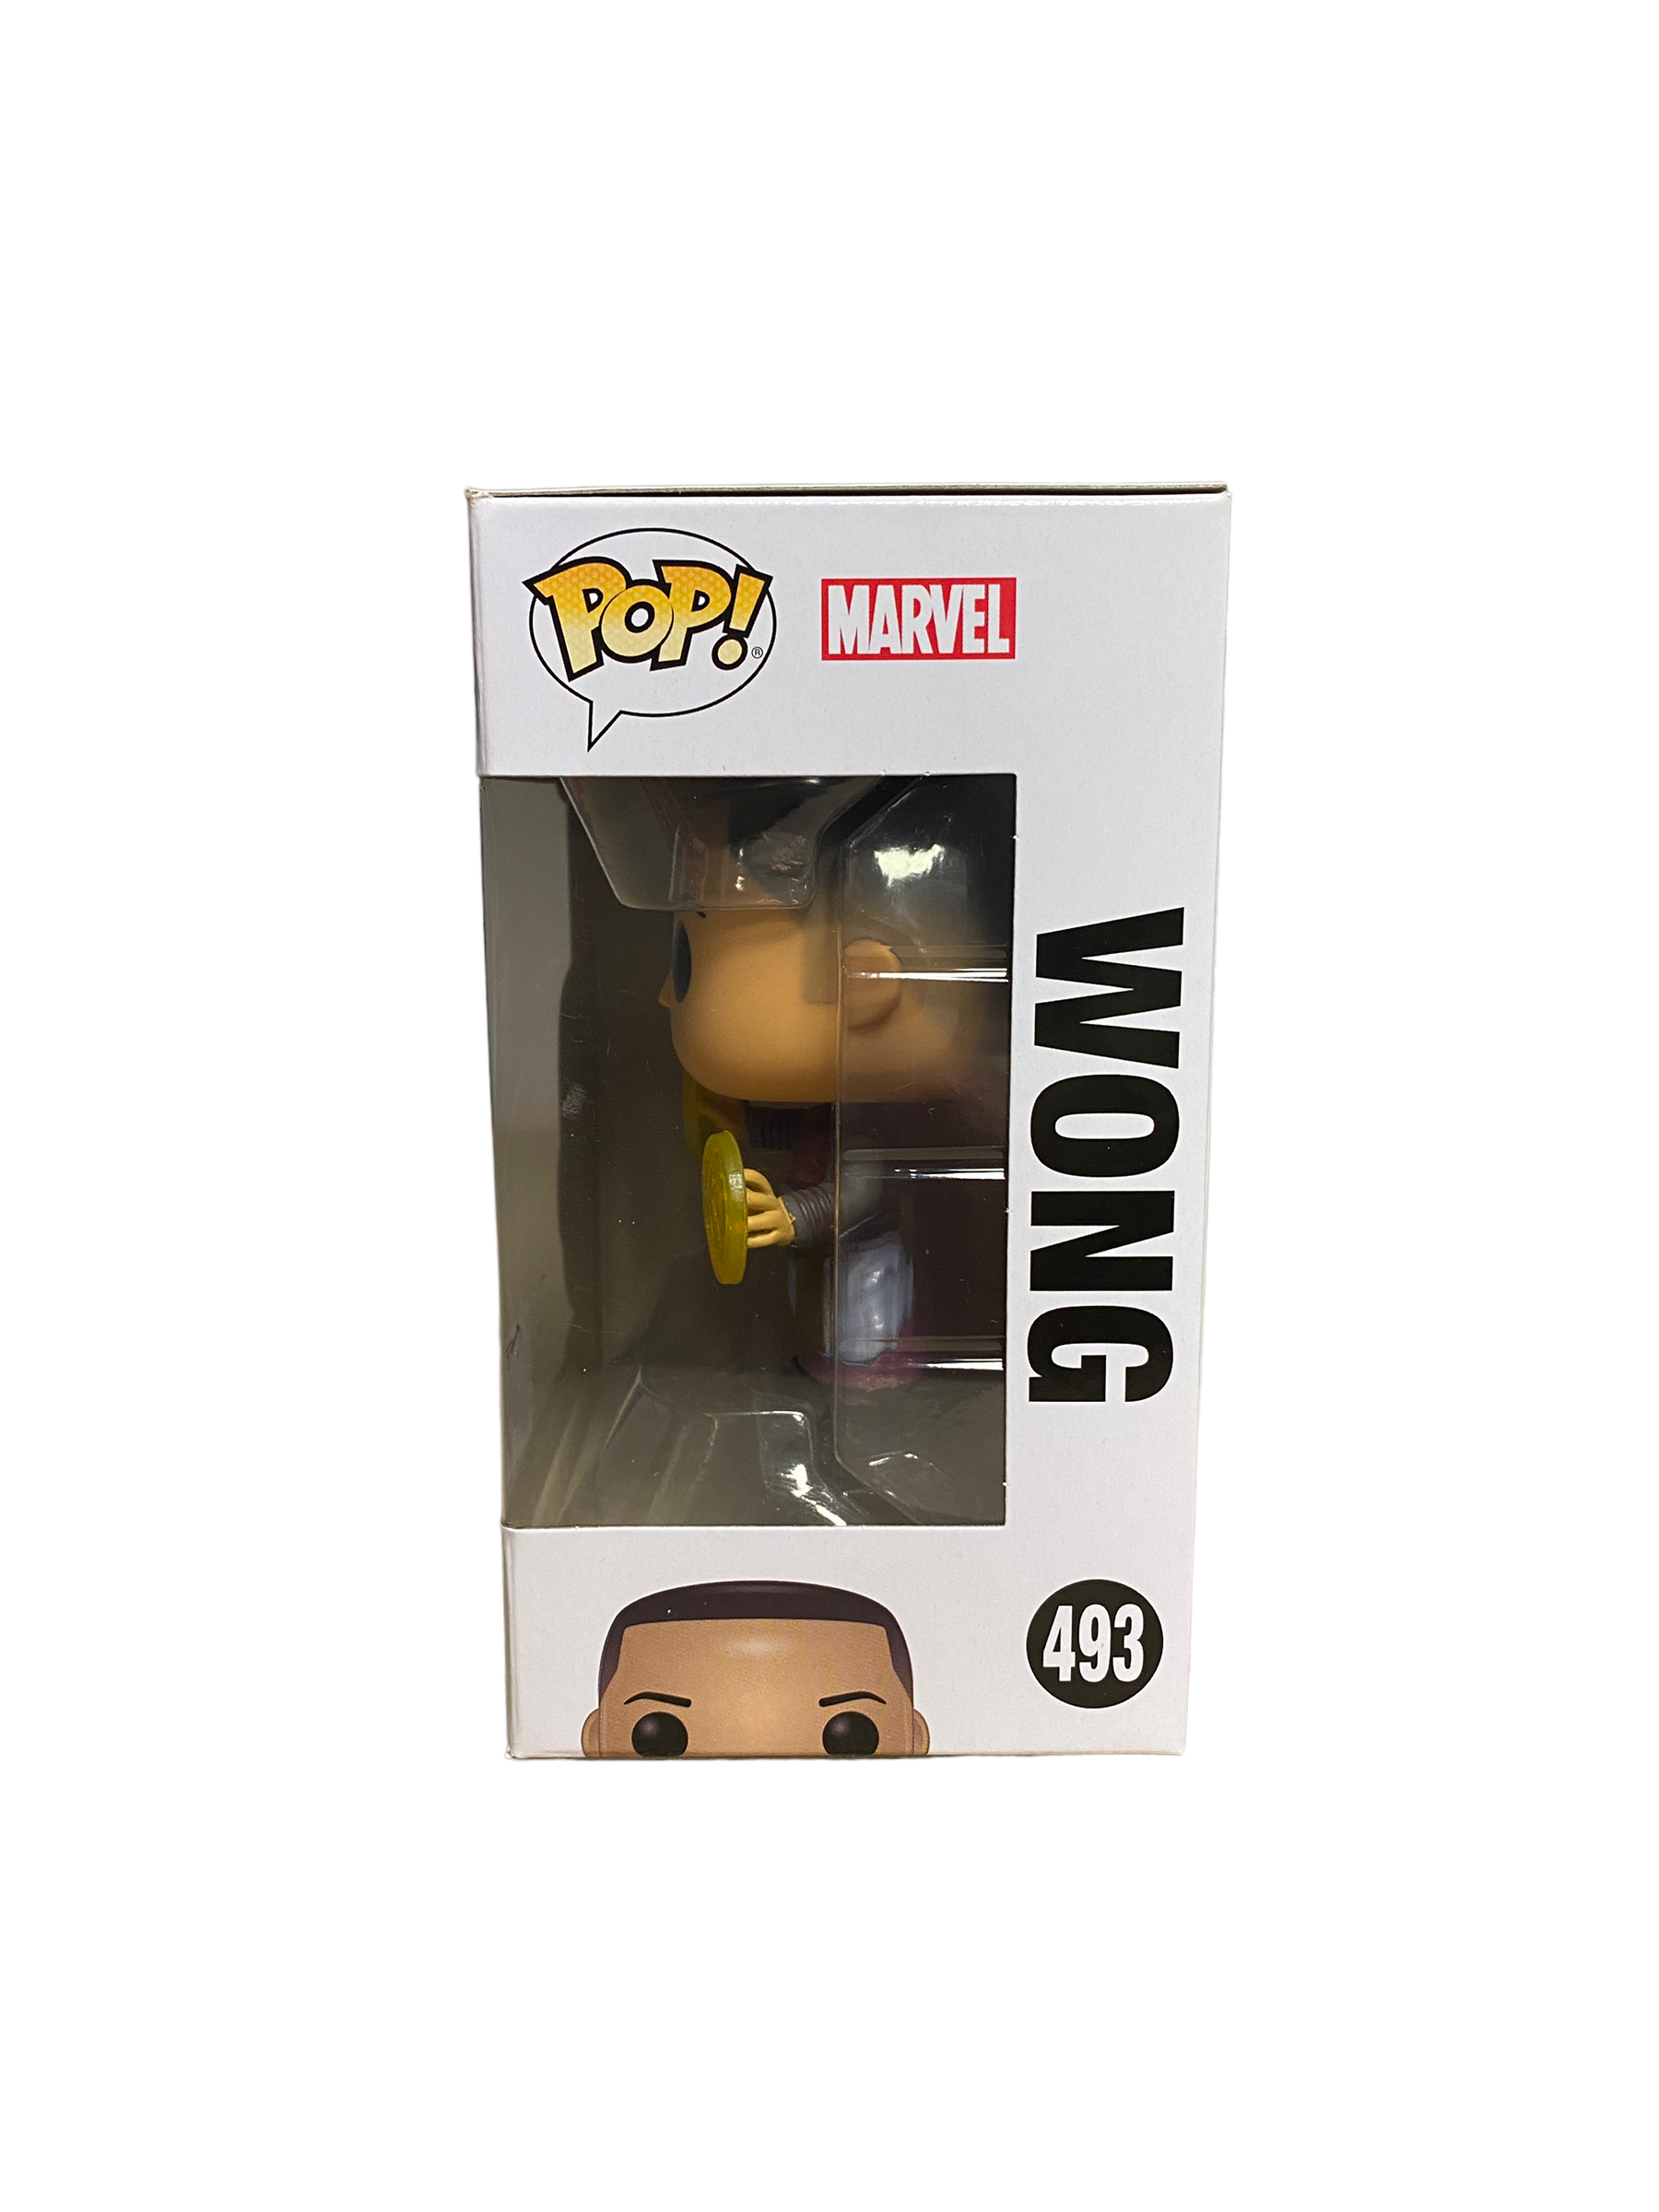 Wong #493 Funko Pop! - Avengers Endgame - SDCC 2019 Official Convention Exclusive - Condition 8.5/10